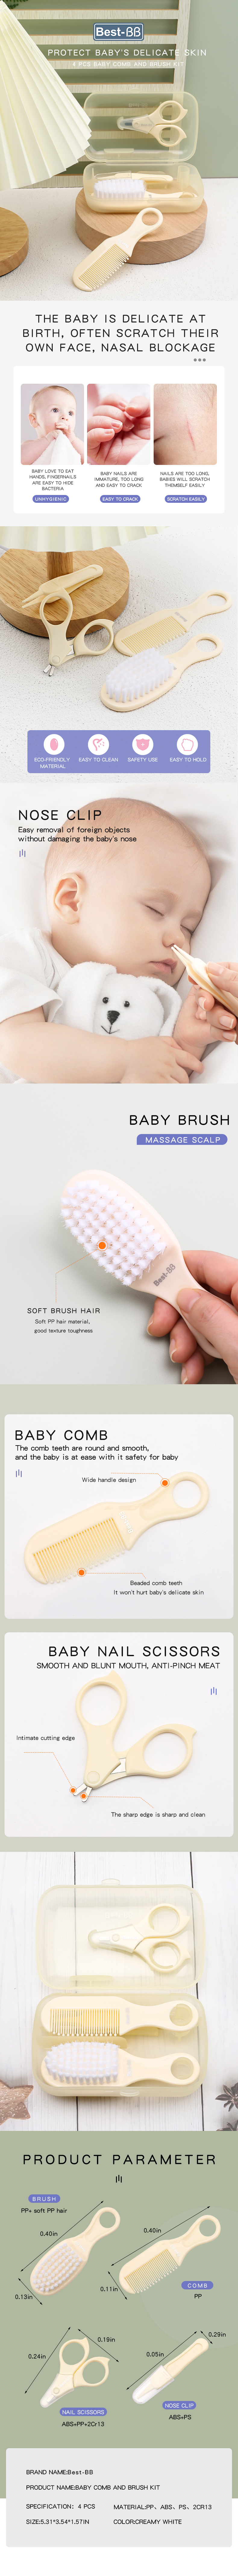 baby comb and brush set